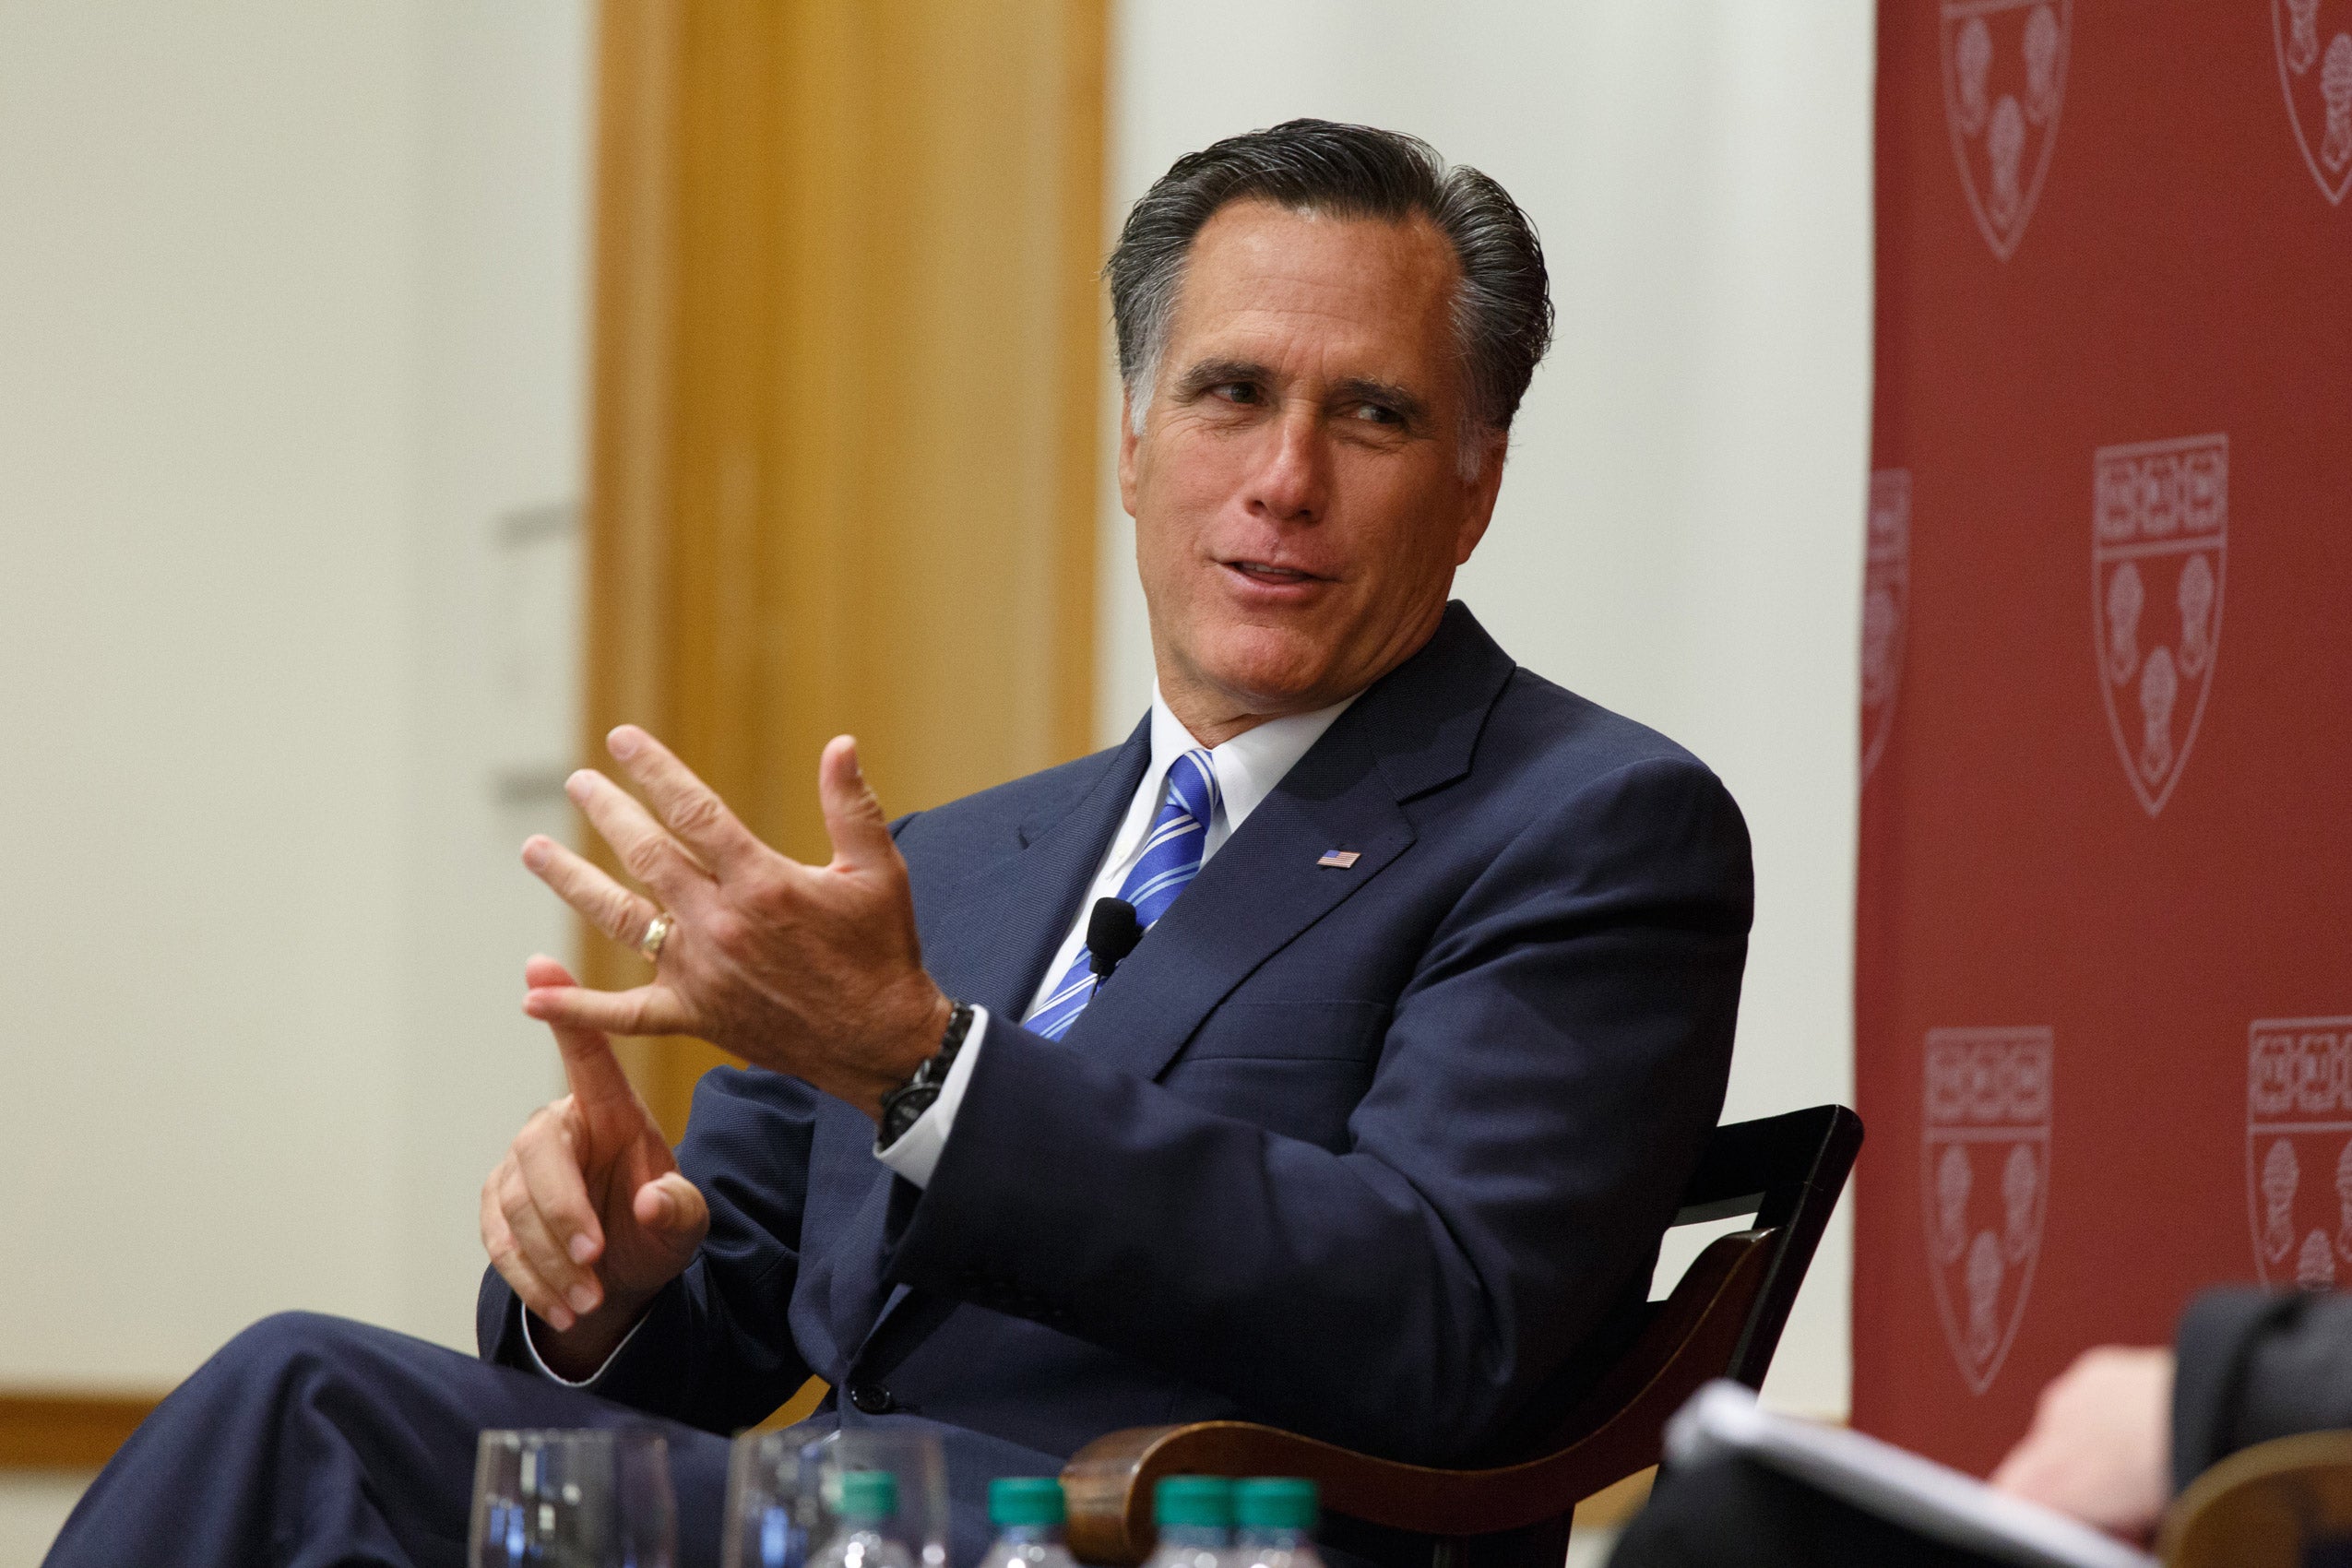 Mitt Romney speaking